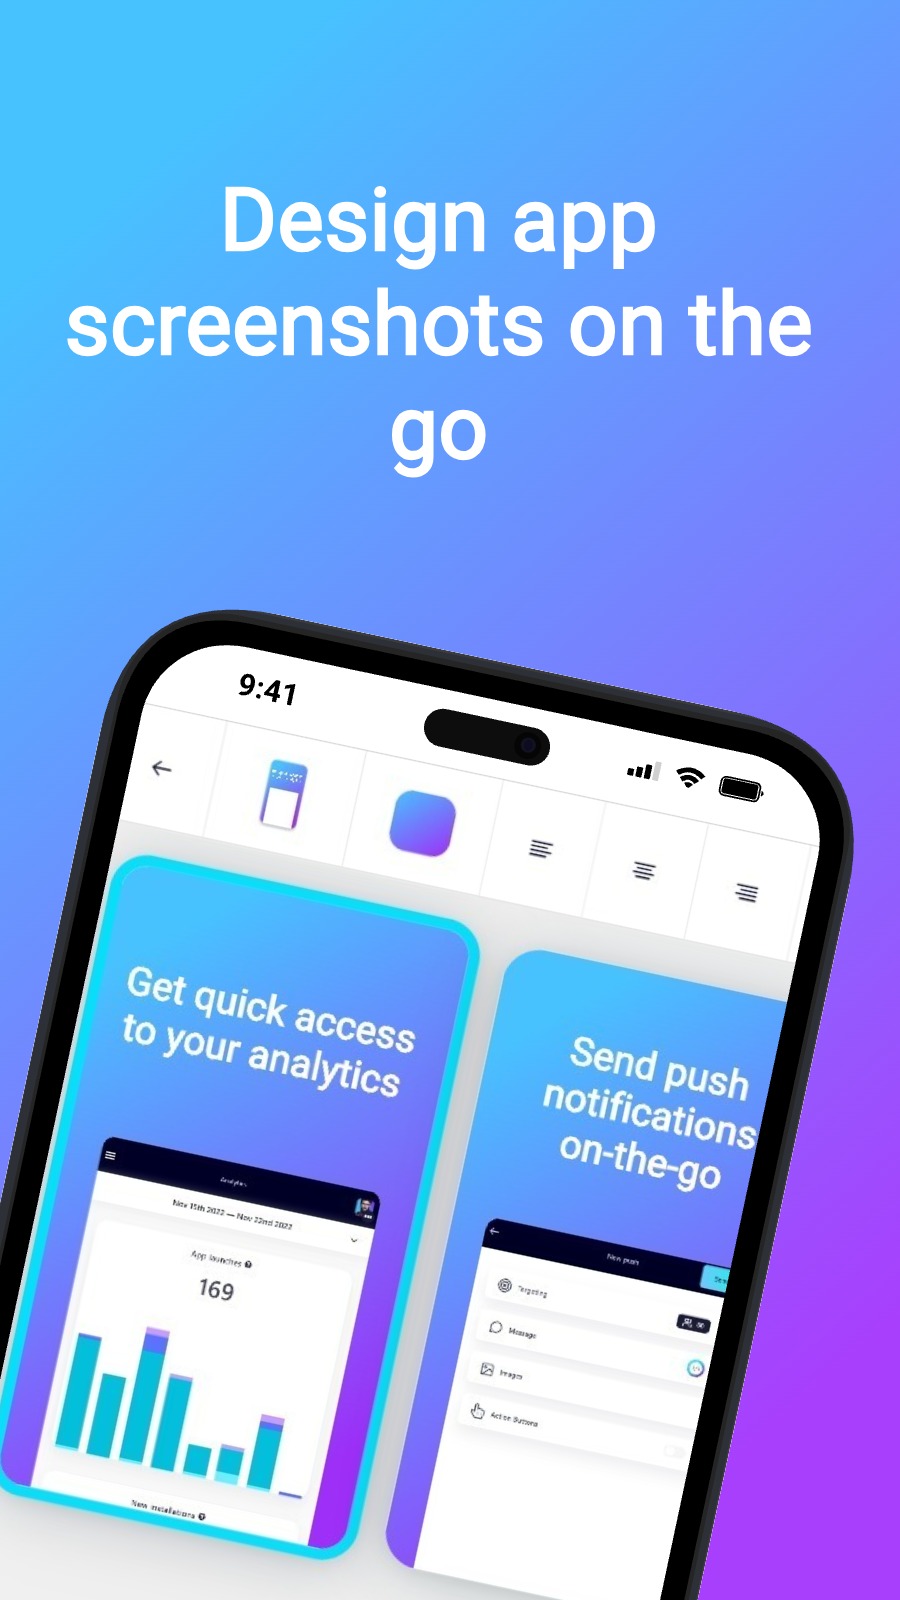 Design app screenshots on the go